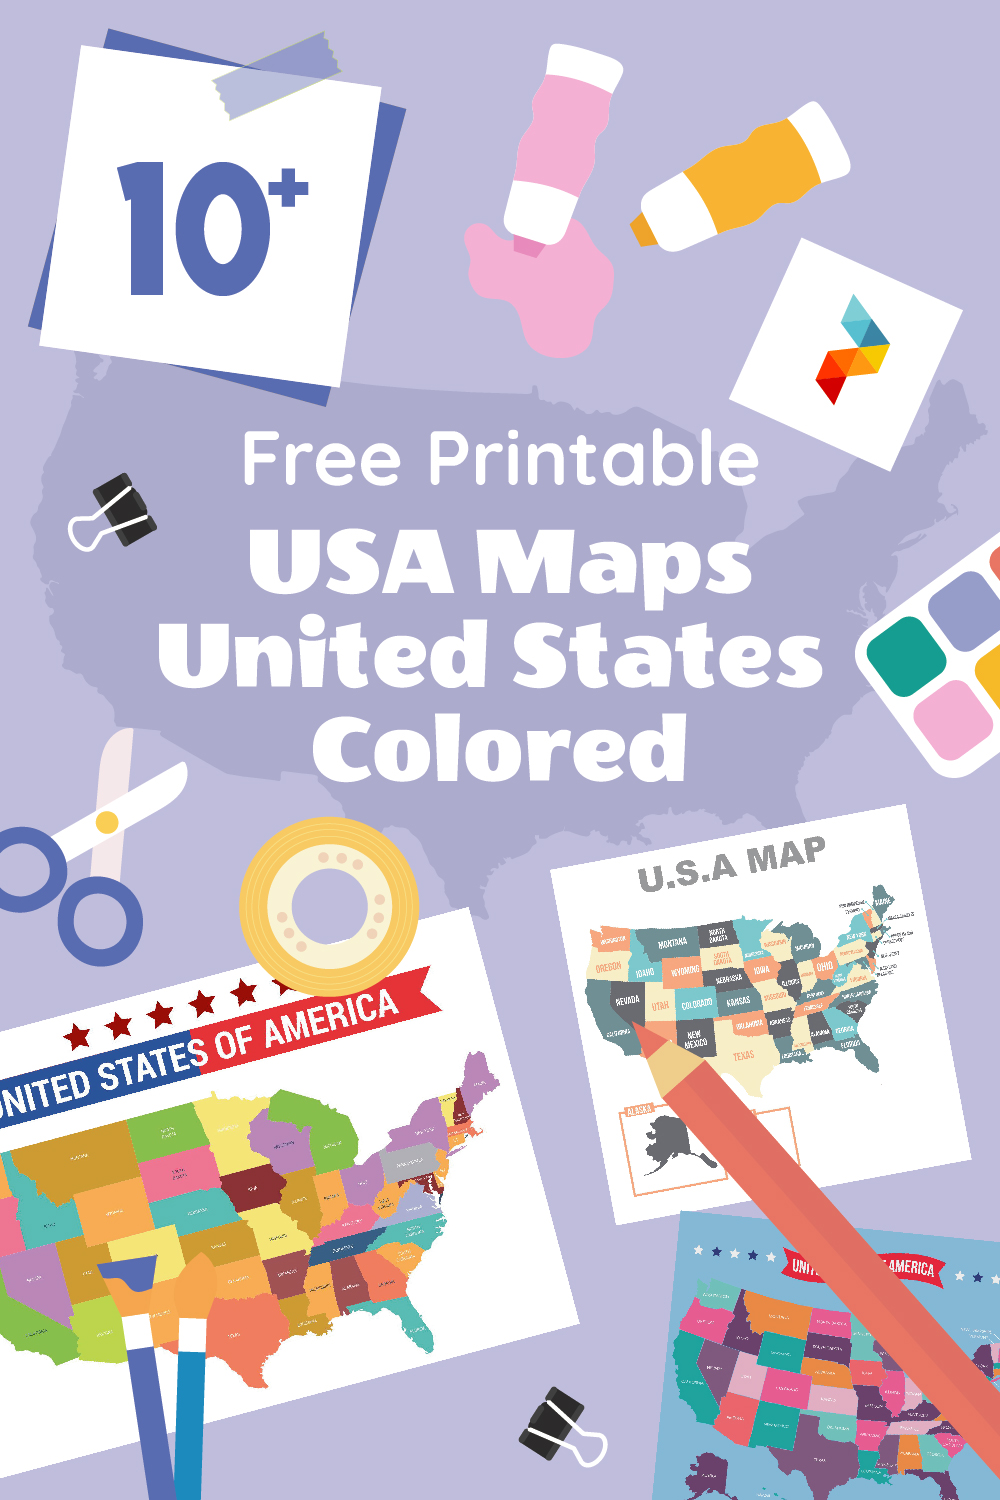 USA Maps United States Colored